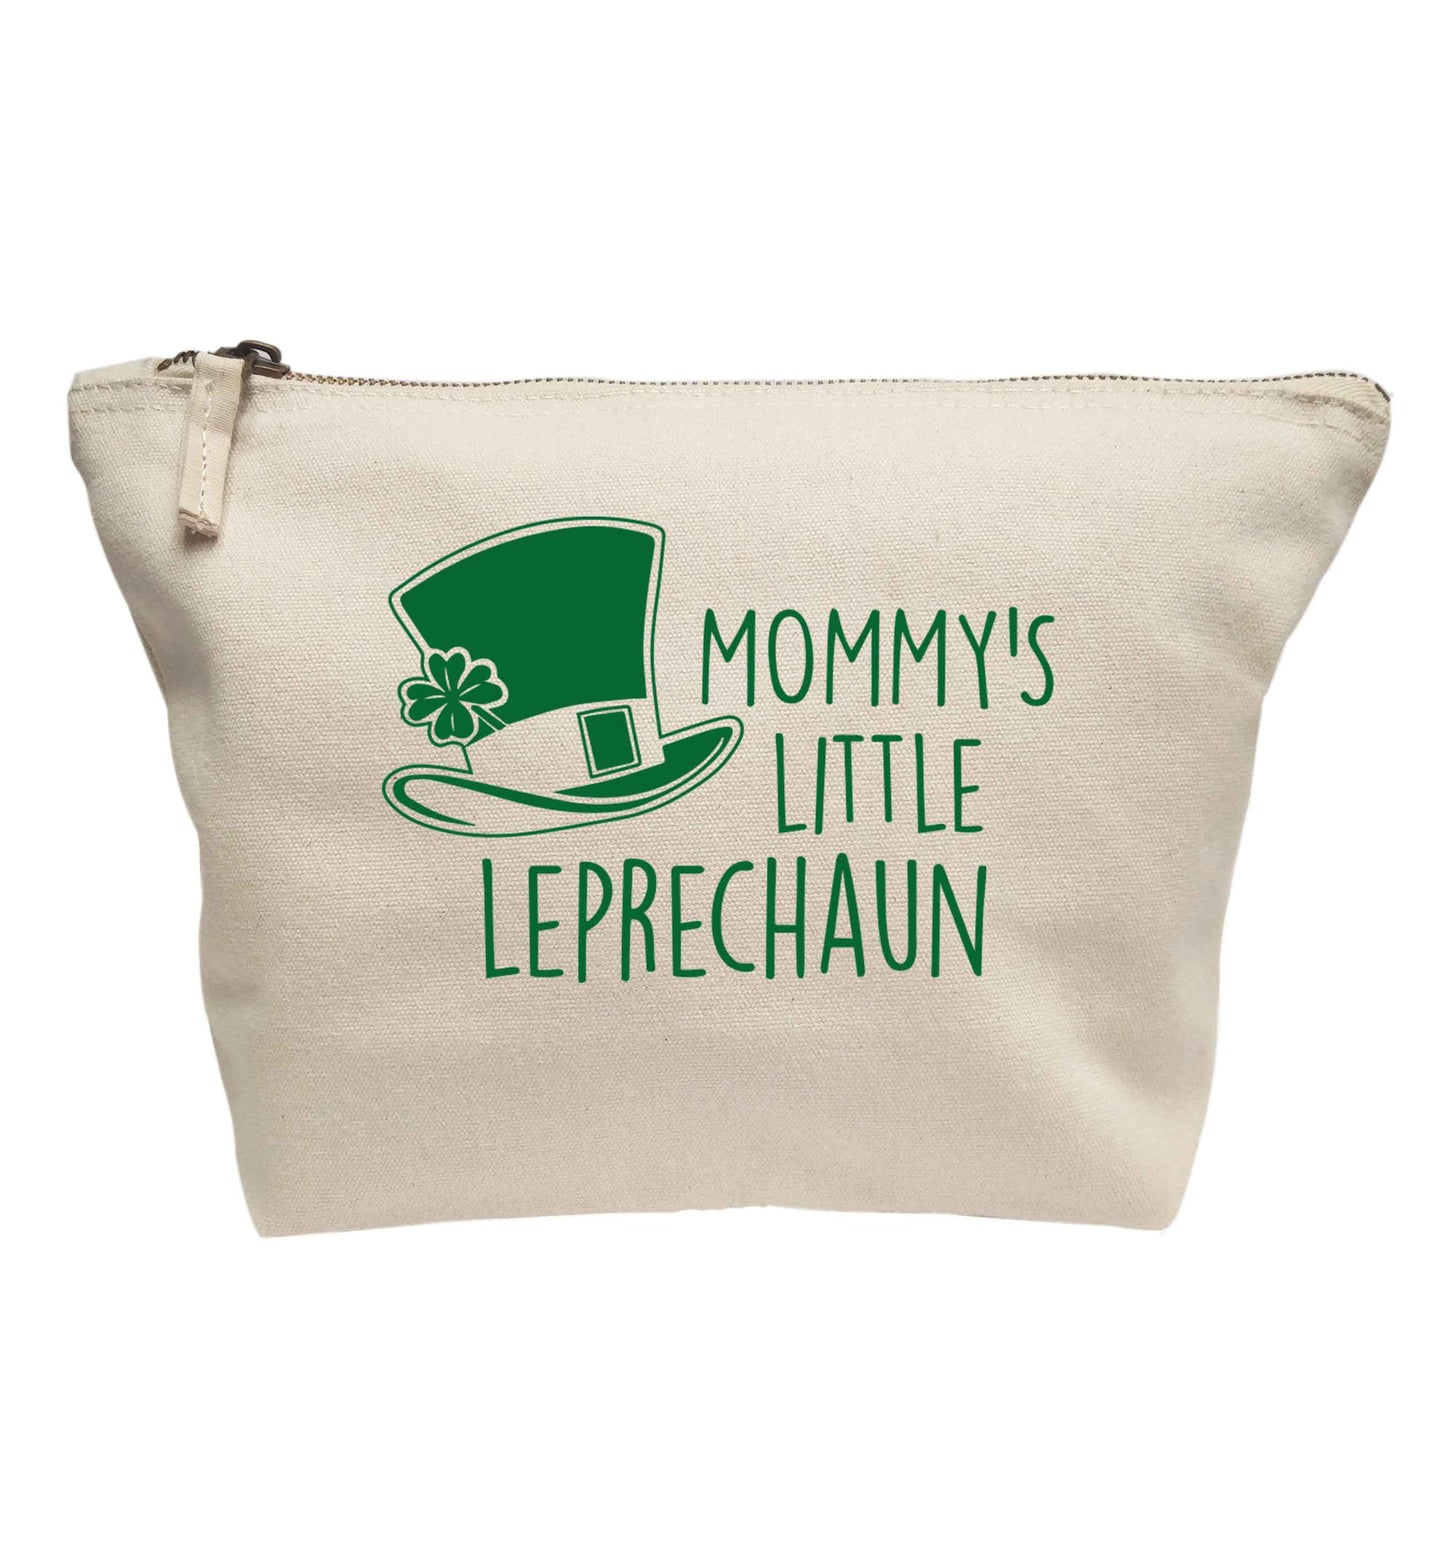 Mommy's little leprechaun | Makeup / wash bag